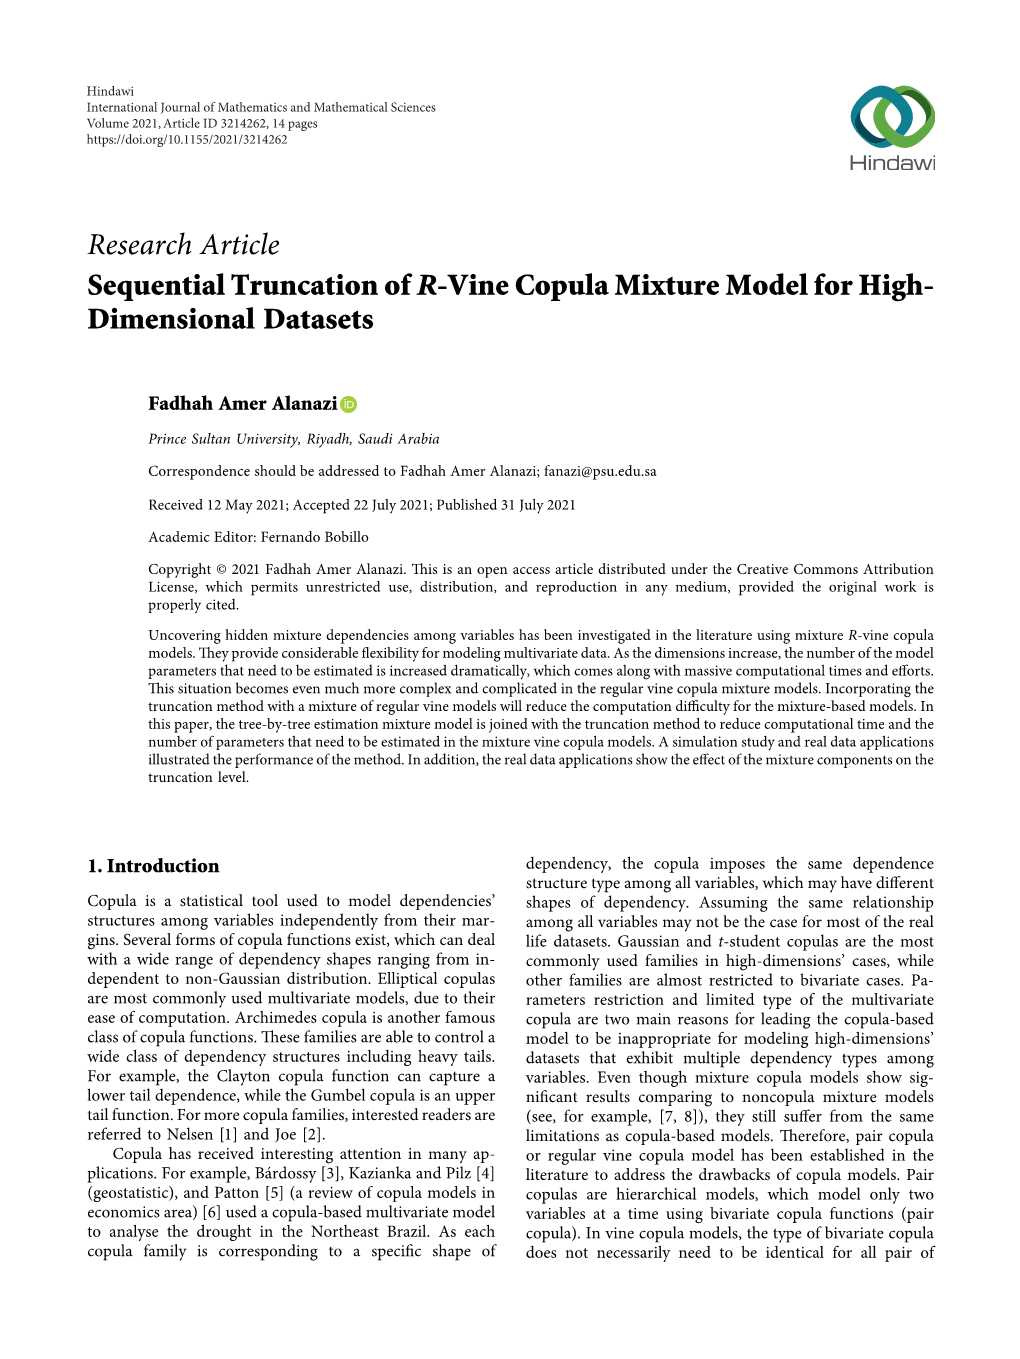 Sequential Truncation of R-Vine Copula Mixture Model for High- Dimensional Datasets